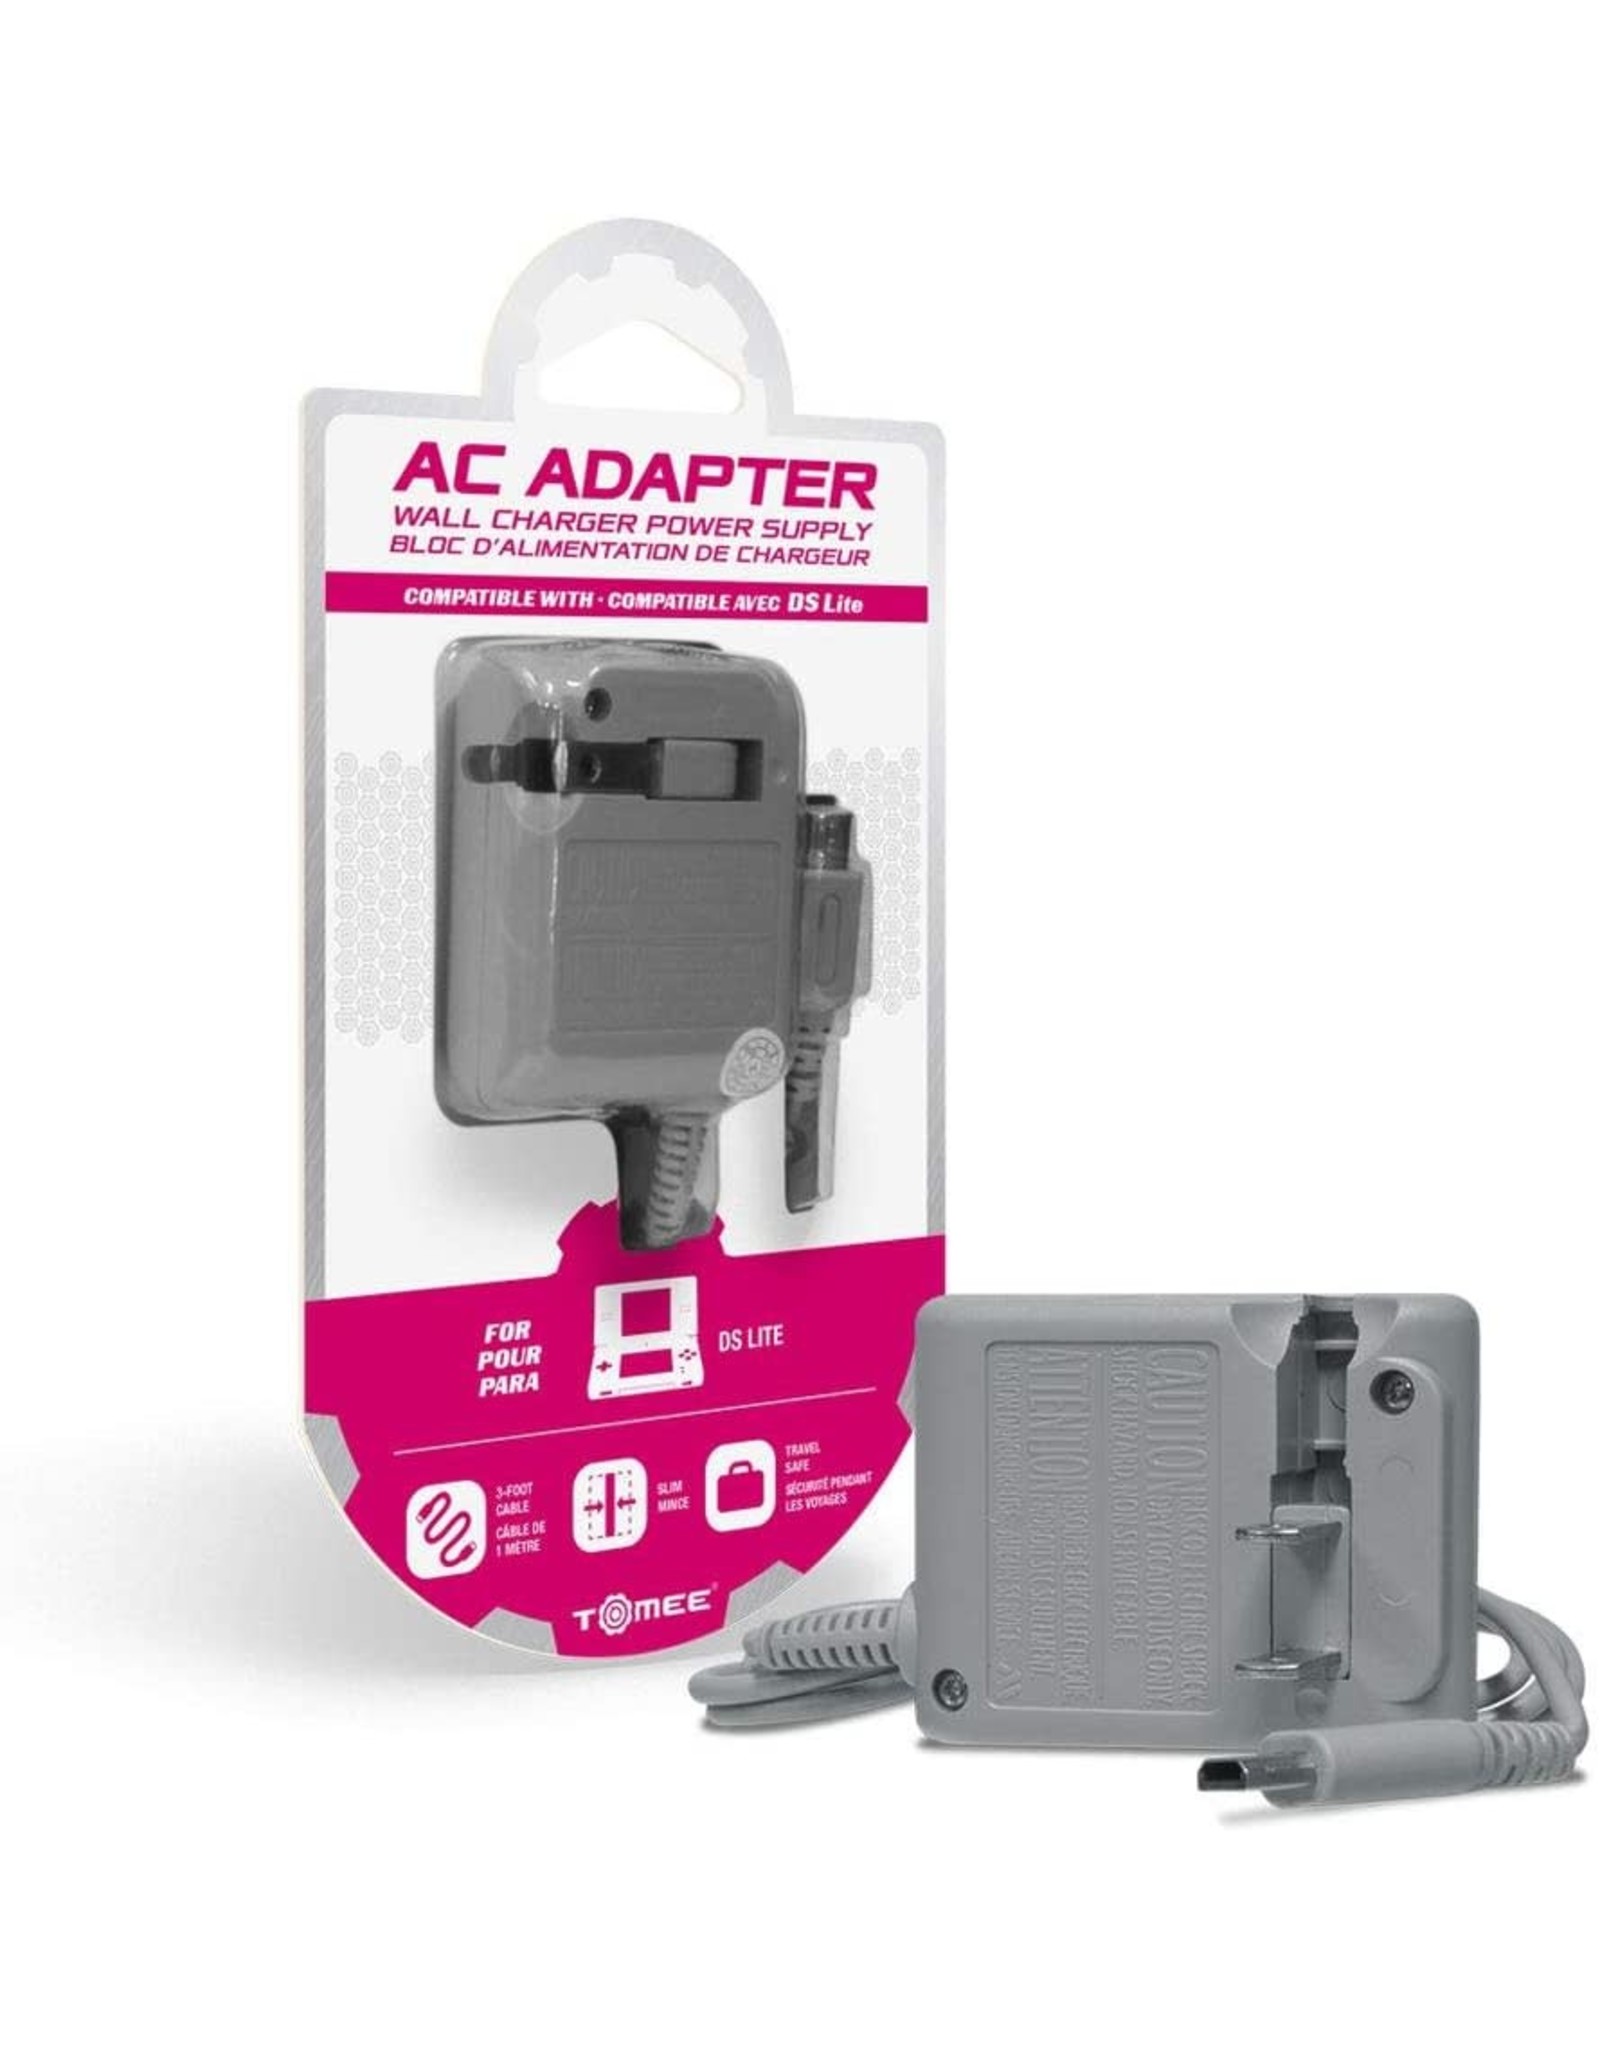 Nintendo DS Nintendo DS Lite AC Power Adapter - Tomee (Brand New)